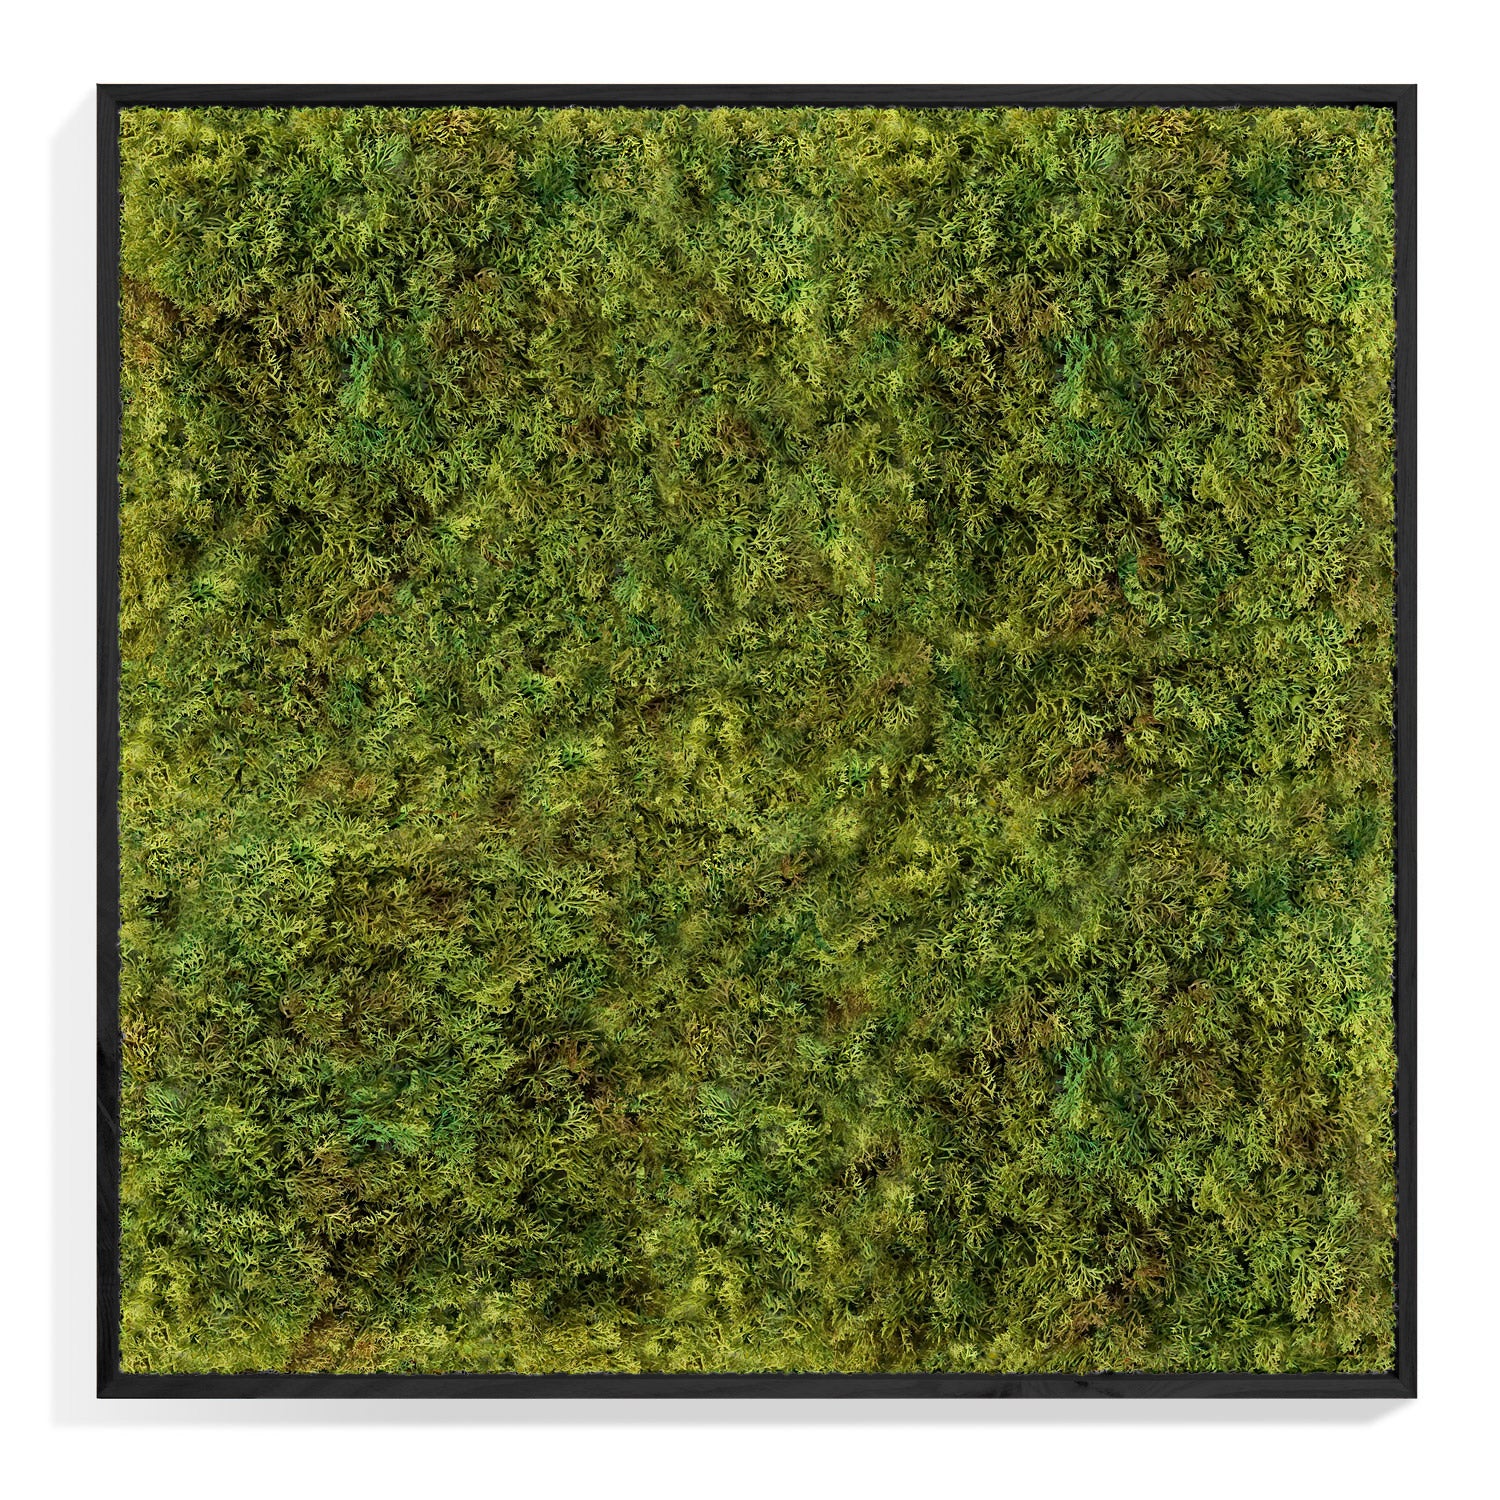 Green Wall, Textured Moss, Black Shadow Box